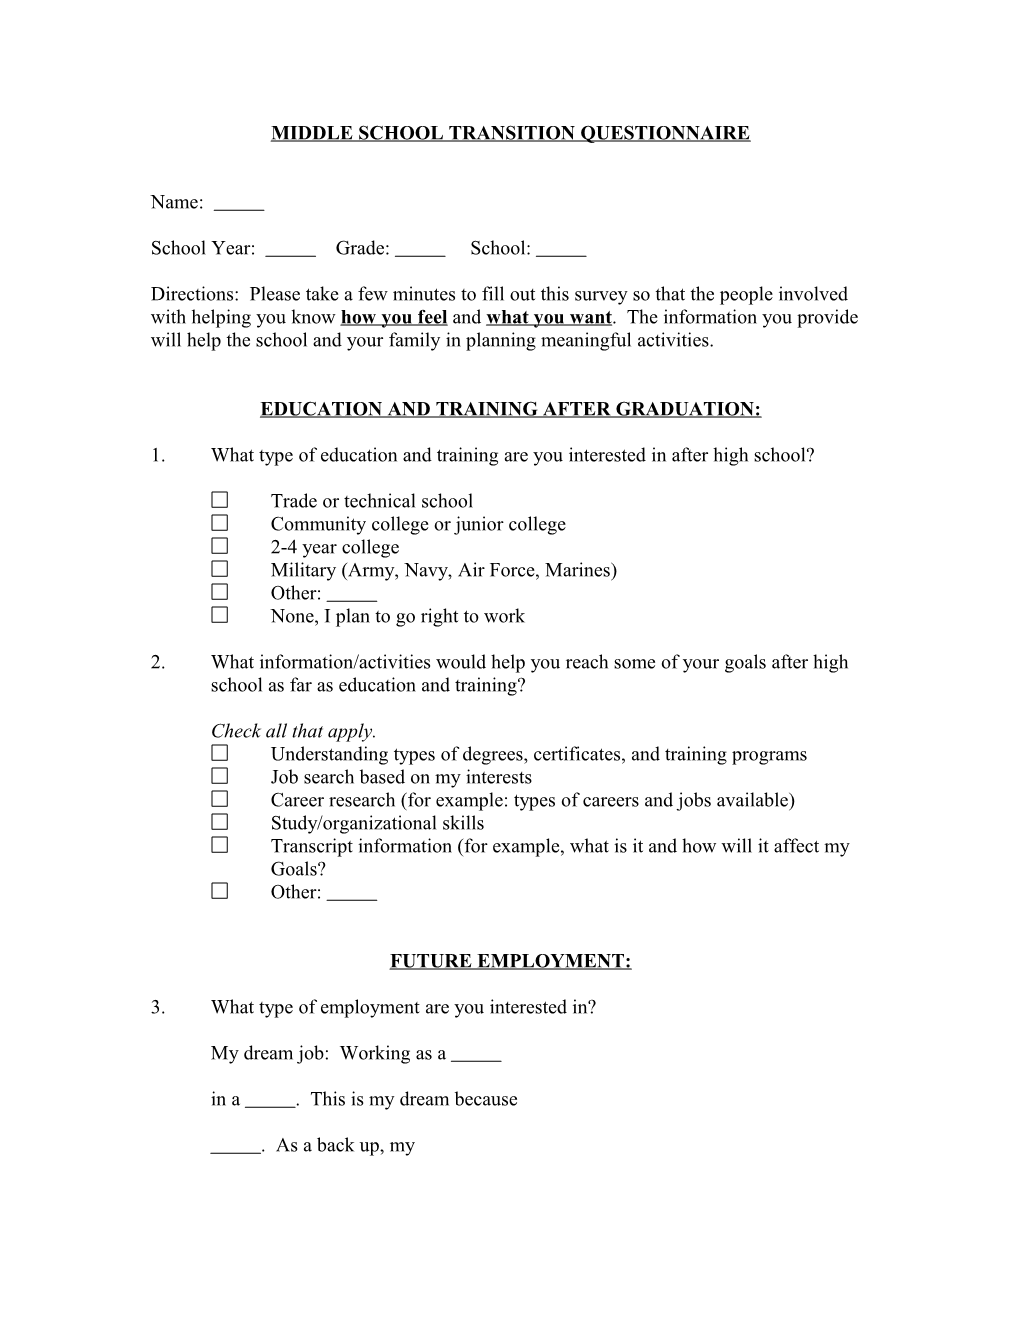 Middle School Transition Questionnaire